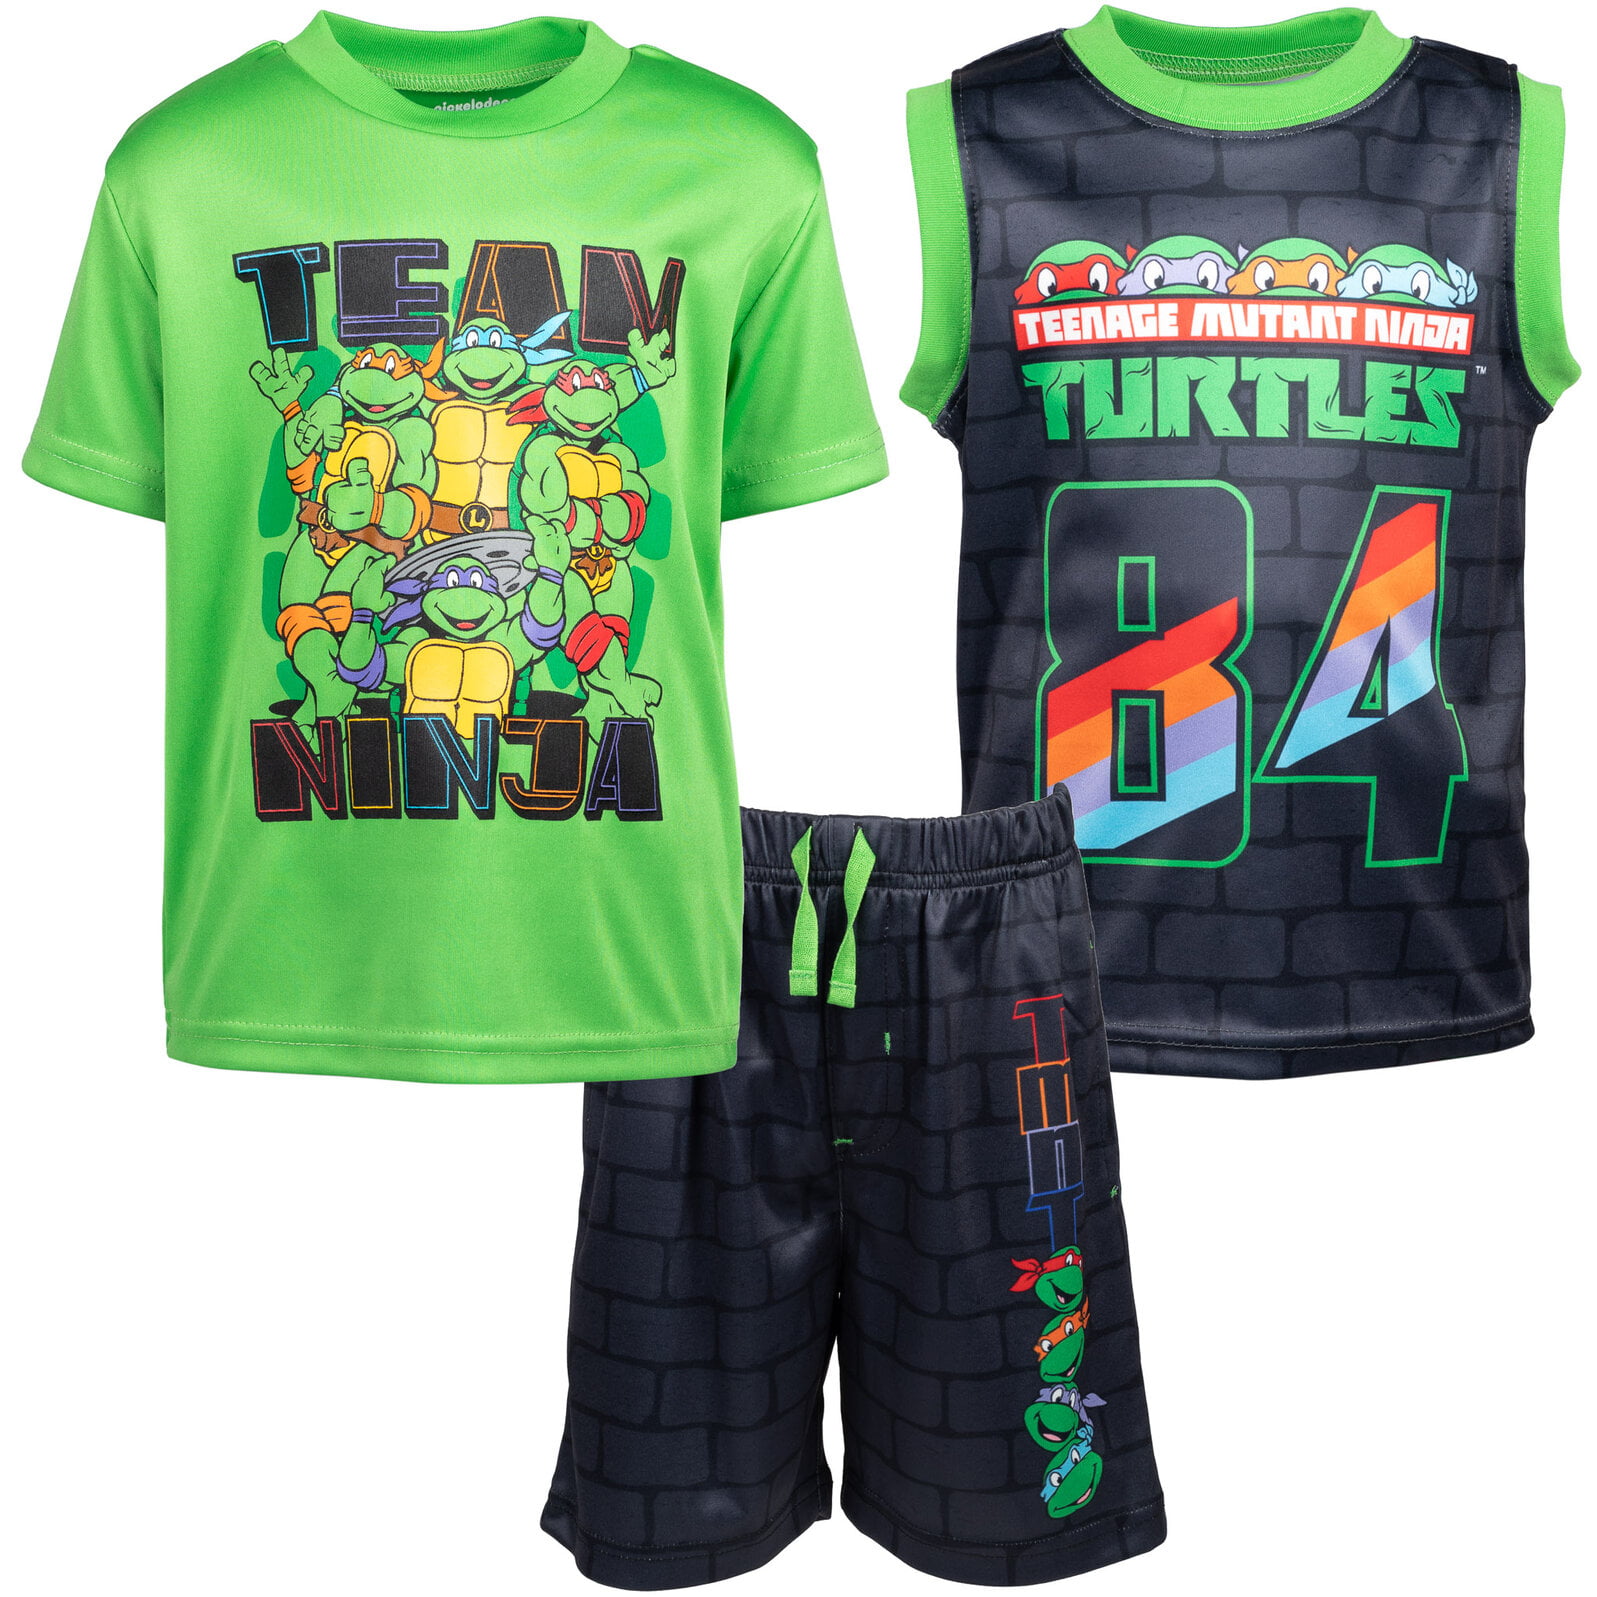 Teenage Mutant Ninja Turtles Big Boys T-Shirt Tank Top and Shorts 3 Piece Outfit Set Black / Green 10-12